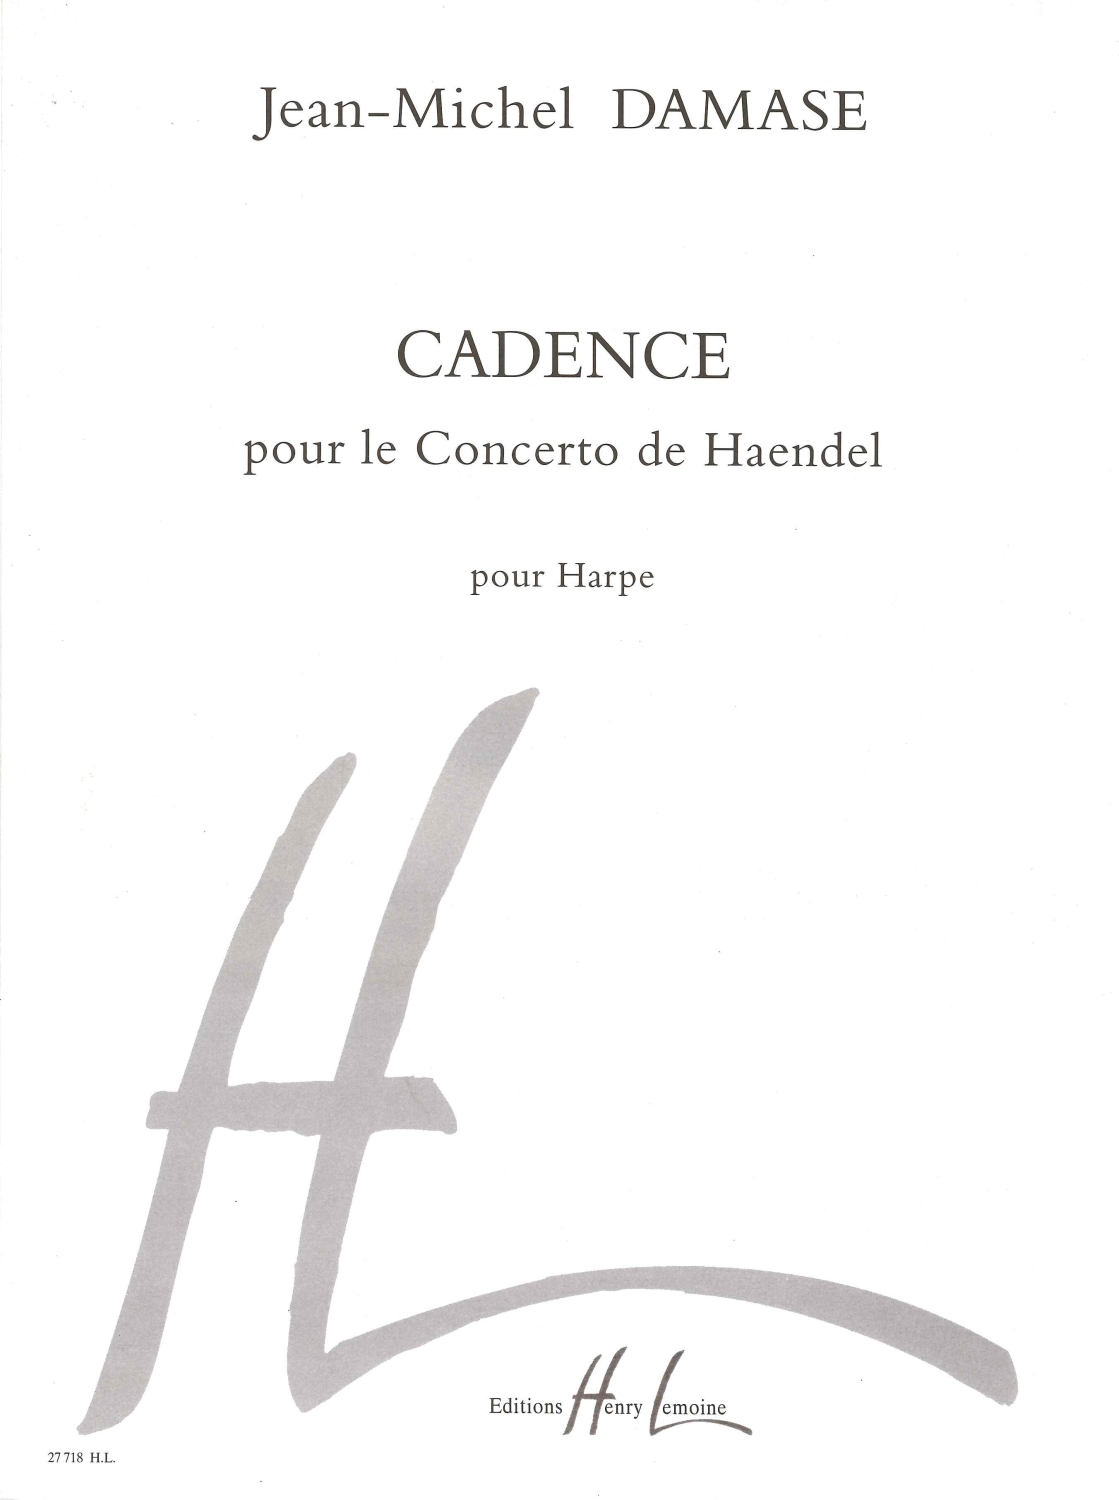 jean-michel-damase-cadence-pour-haendel-concerto-h_0001.JPG